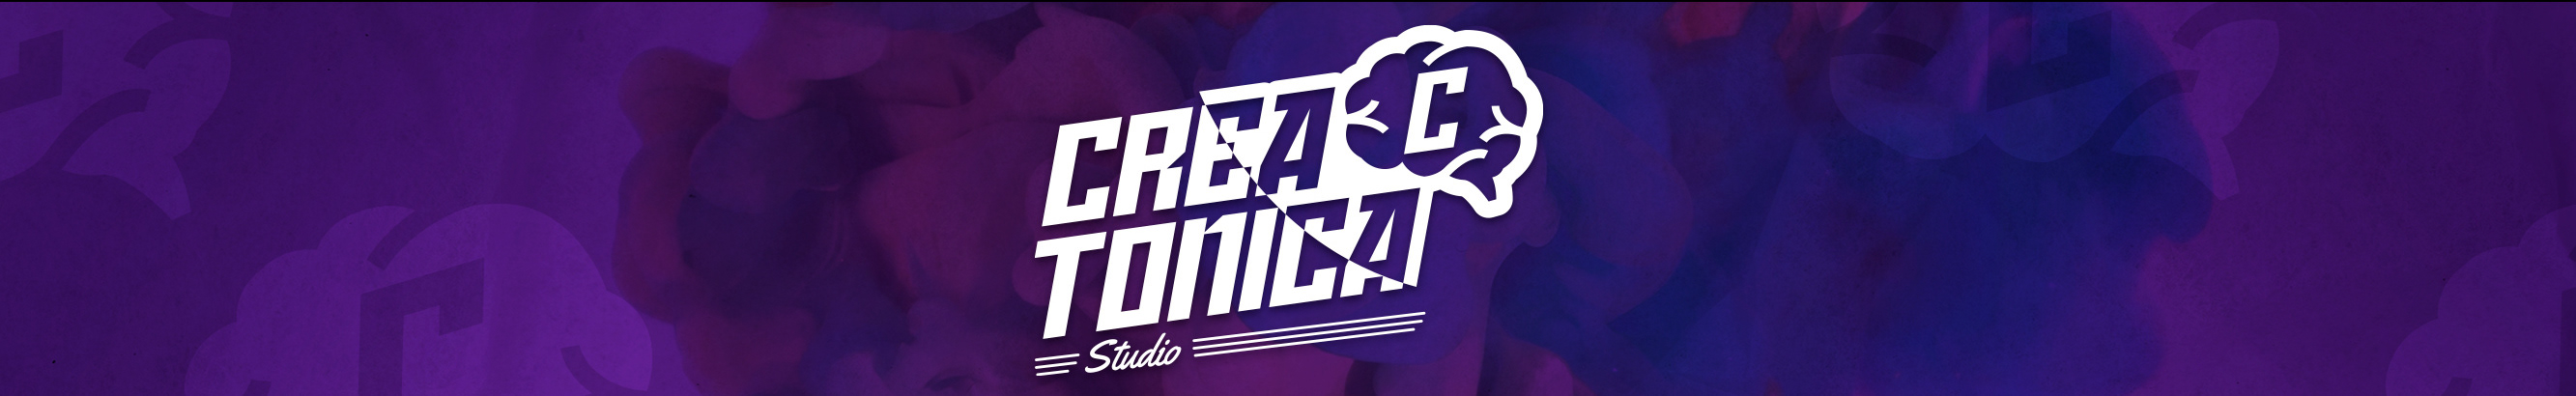 Creatonica Studios profilbanner